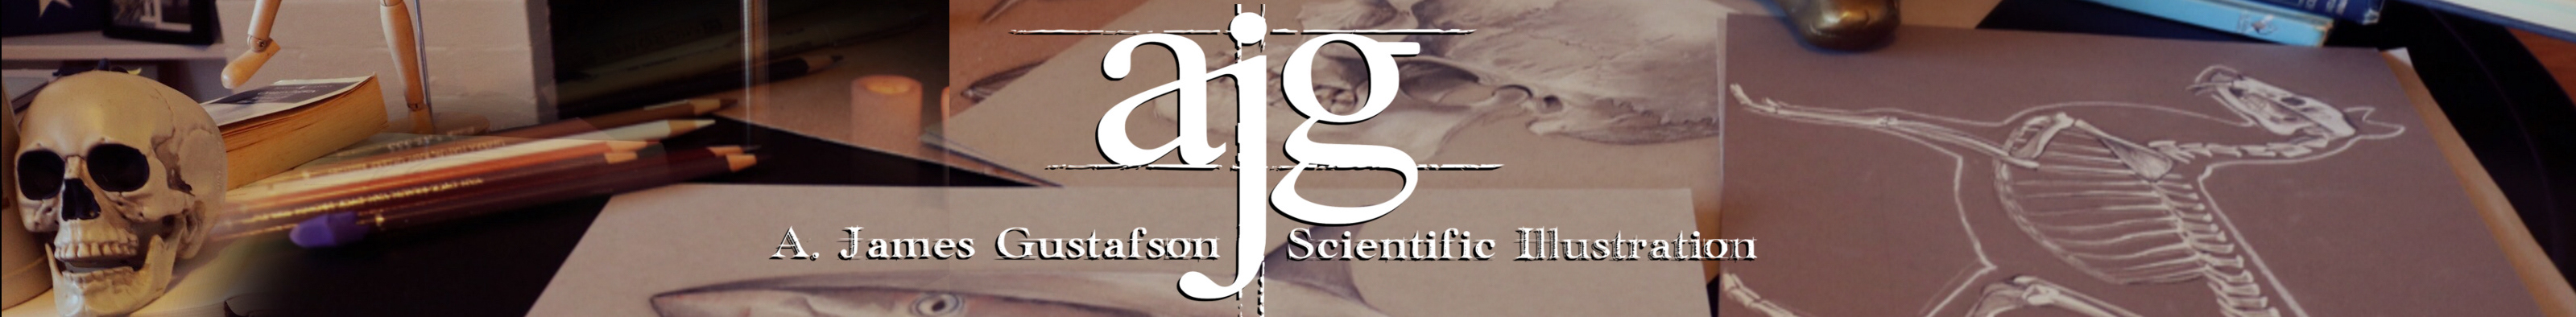 A. James Gustafson's profile banner